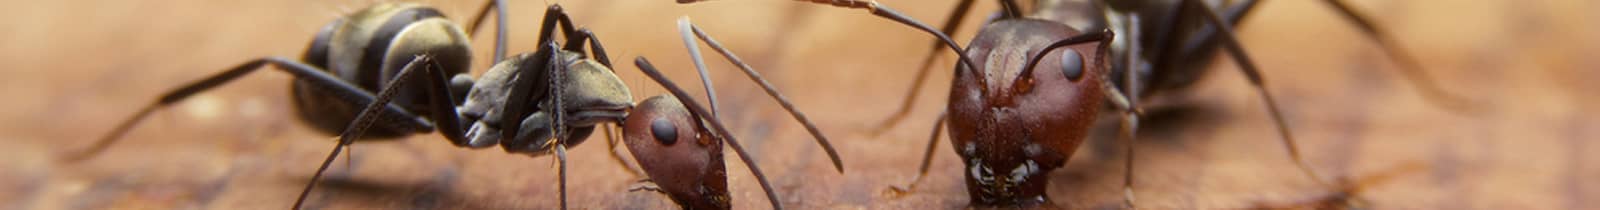 Ant-treatment pest control Nashville, TN